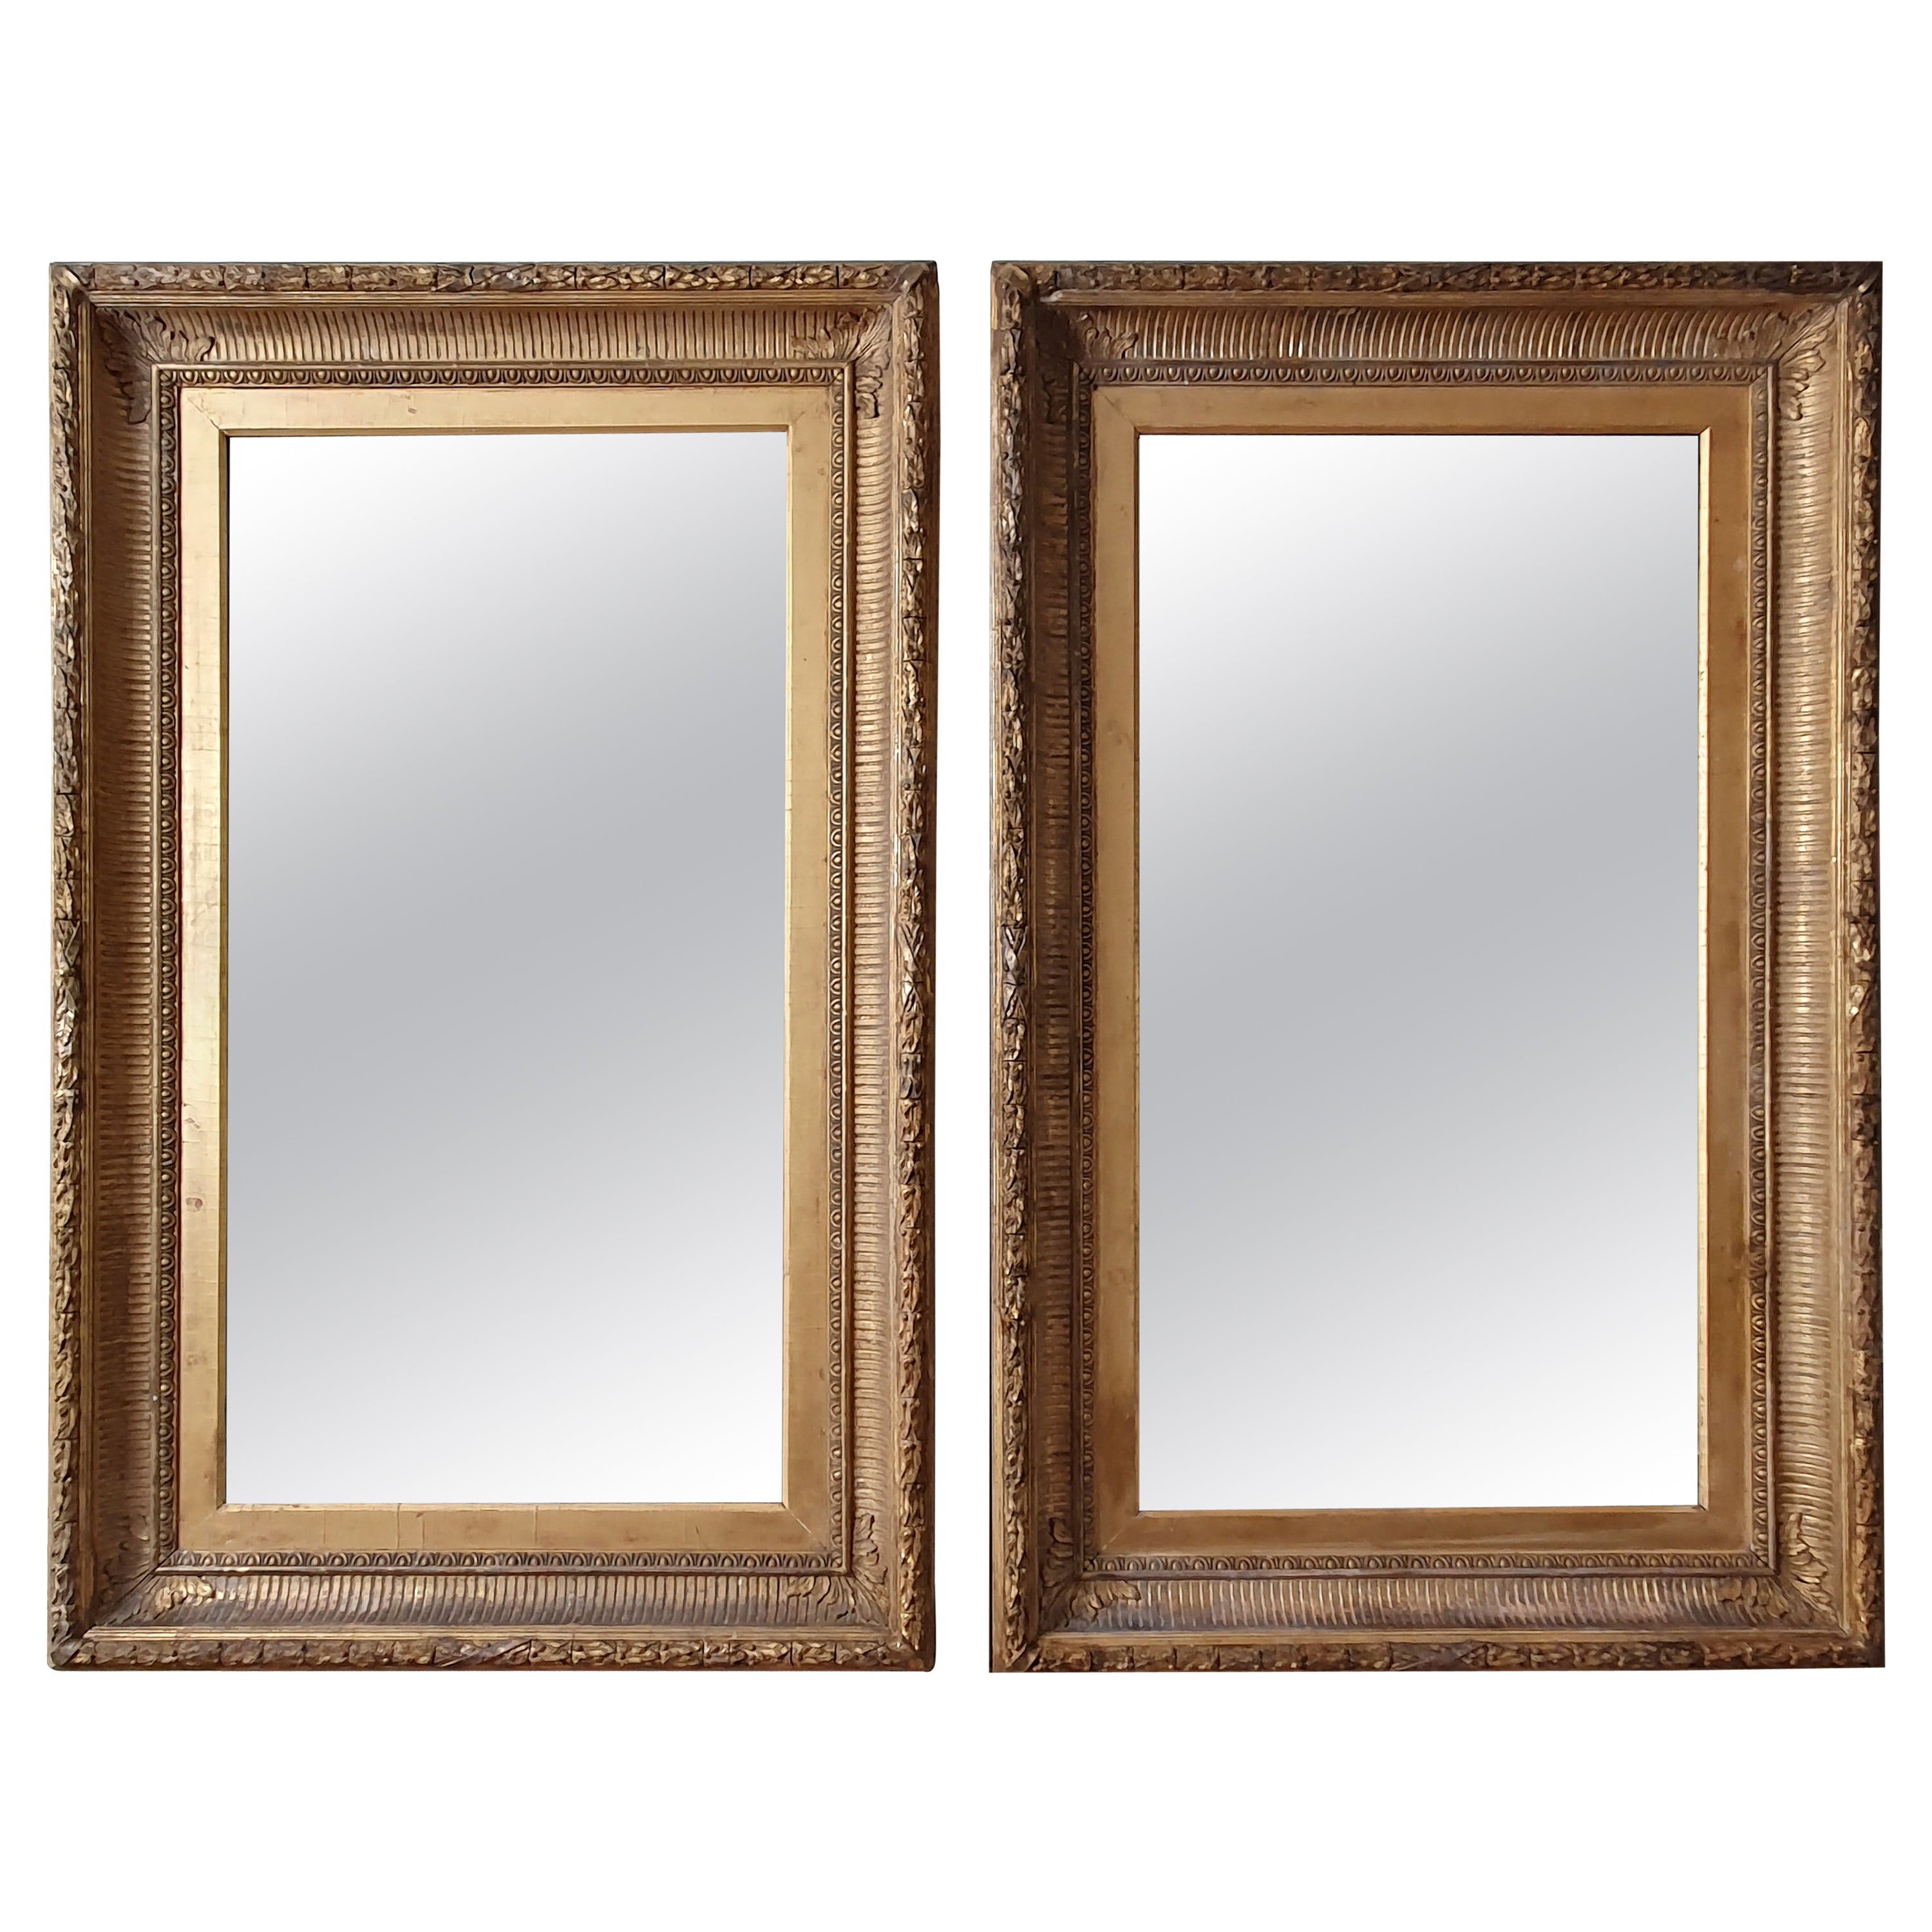 Pair Of 19th Century Wall Mirrors